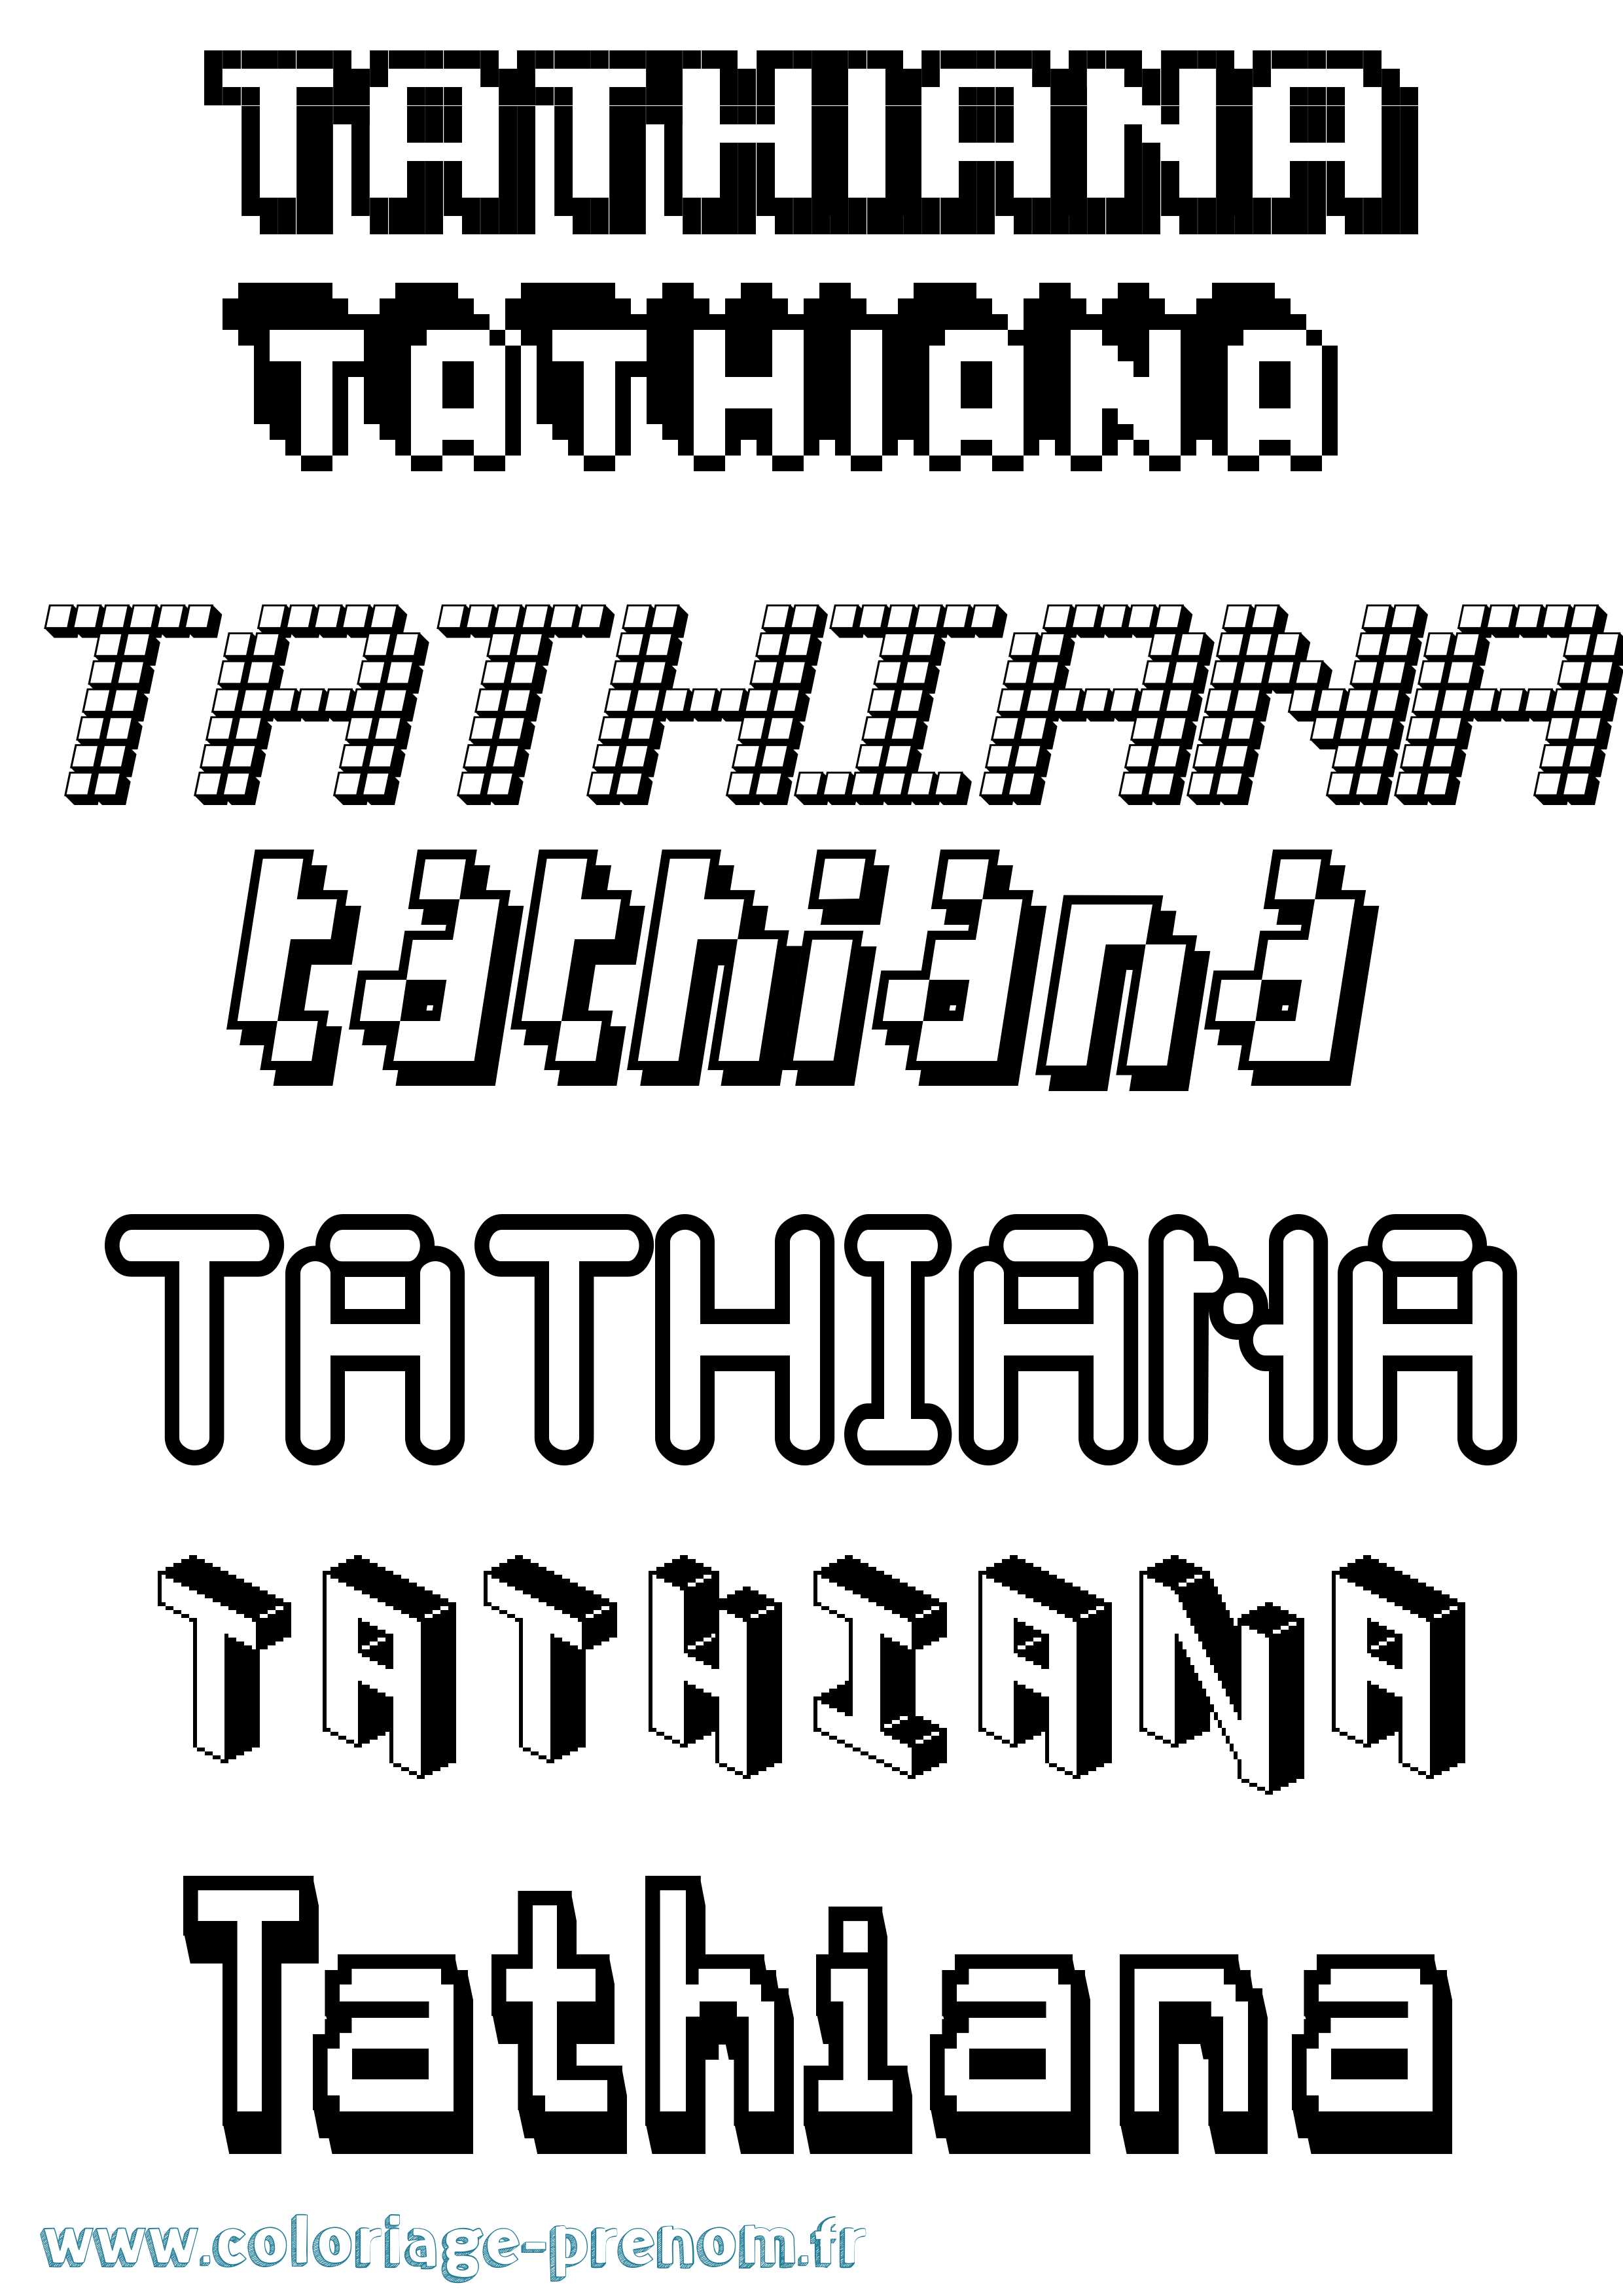 Coloriage prénom Tathiana Pixel